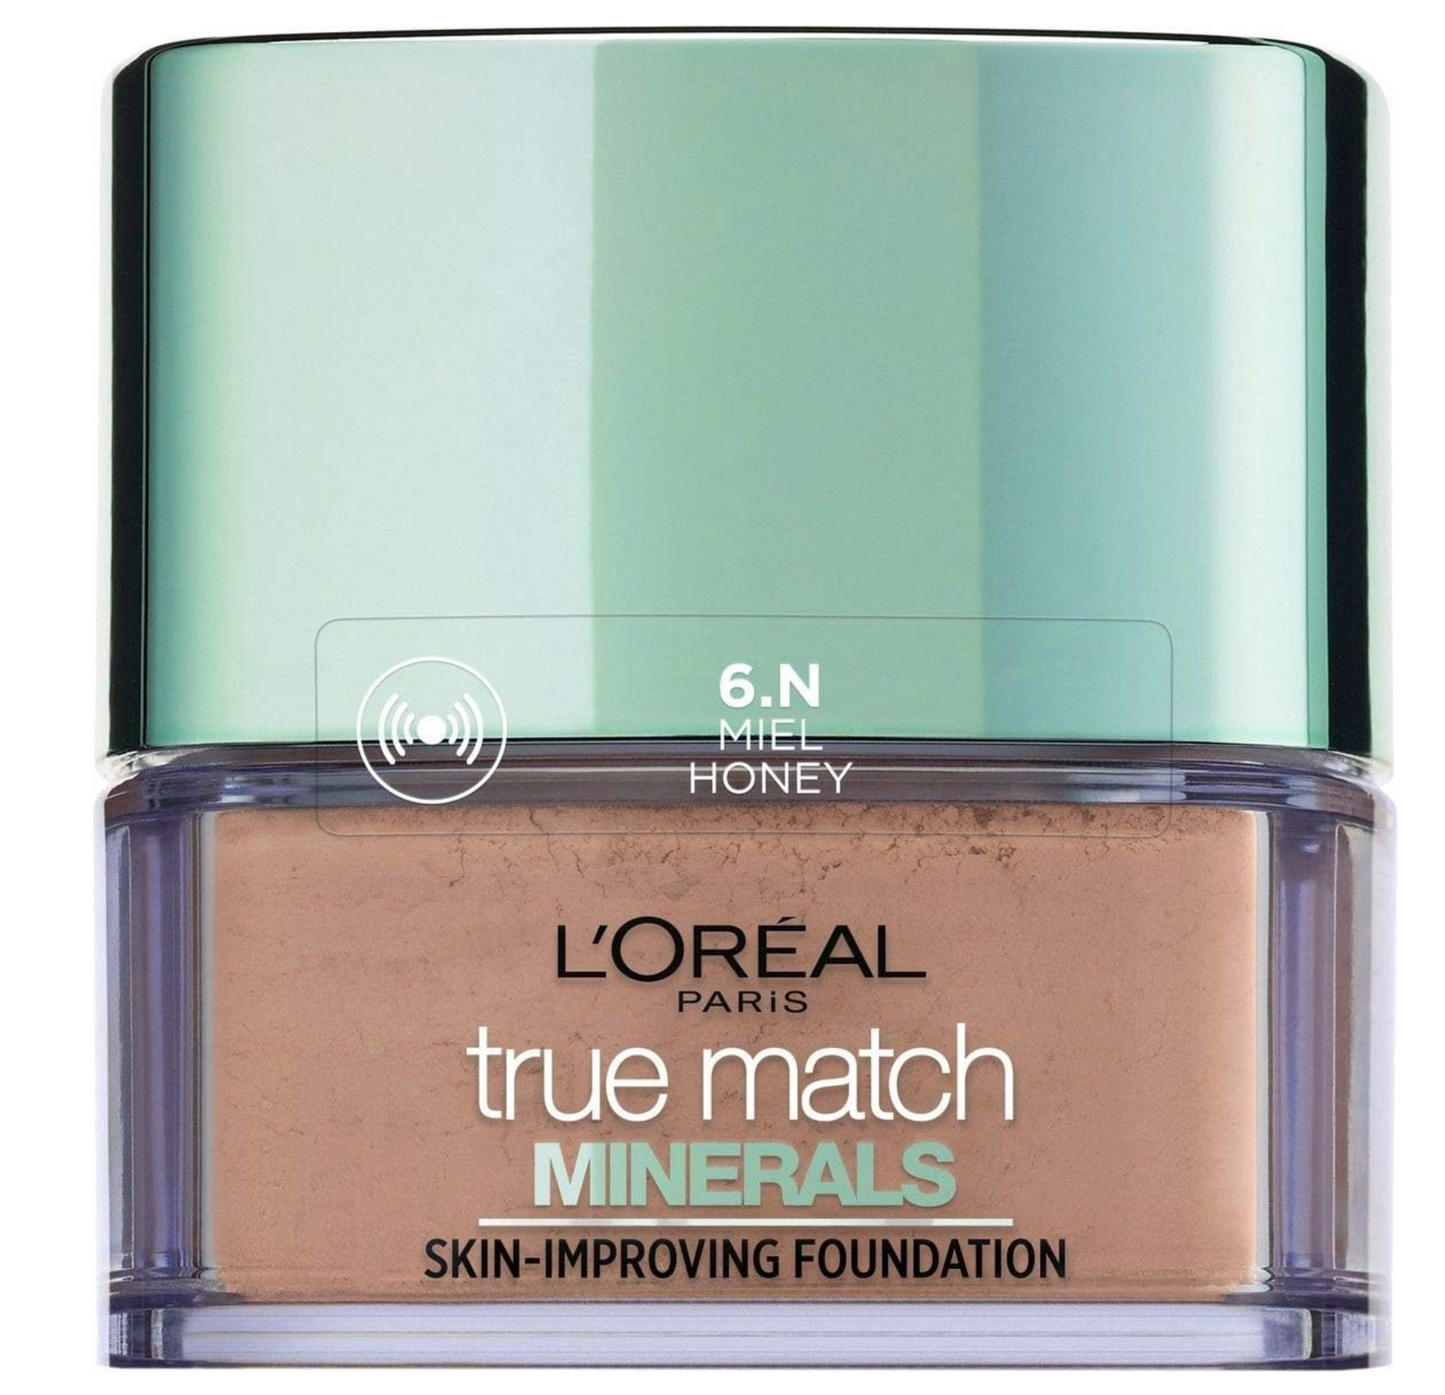 L'Oreal True Match Minerals Skin-Improving Foundation - 6.N Honey